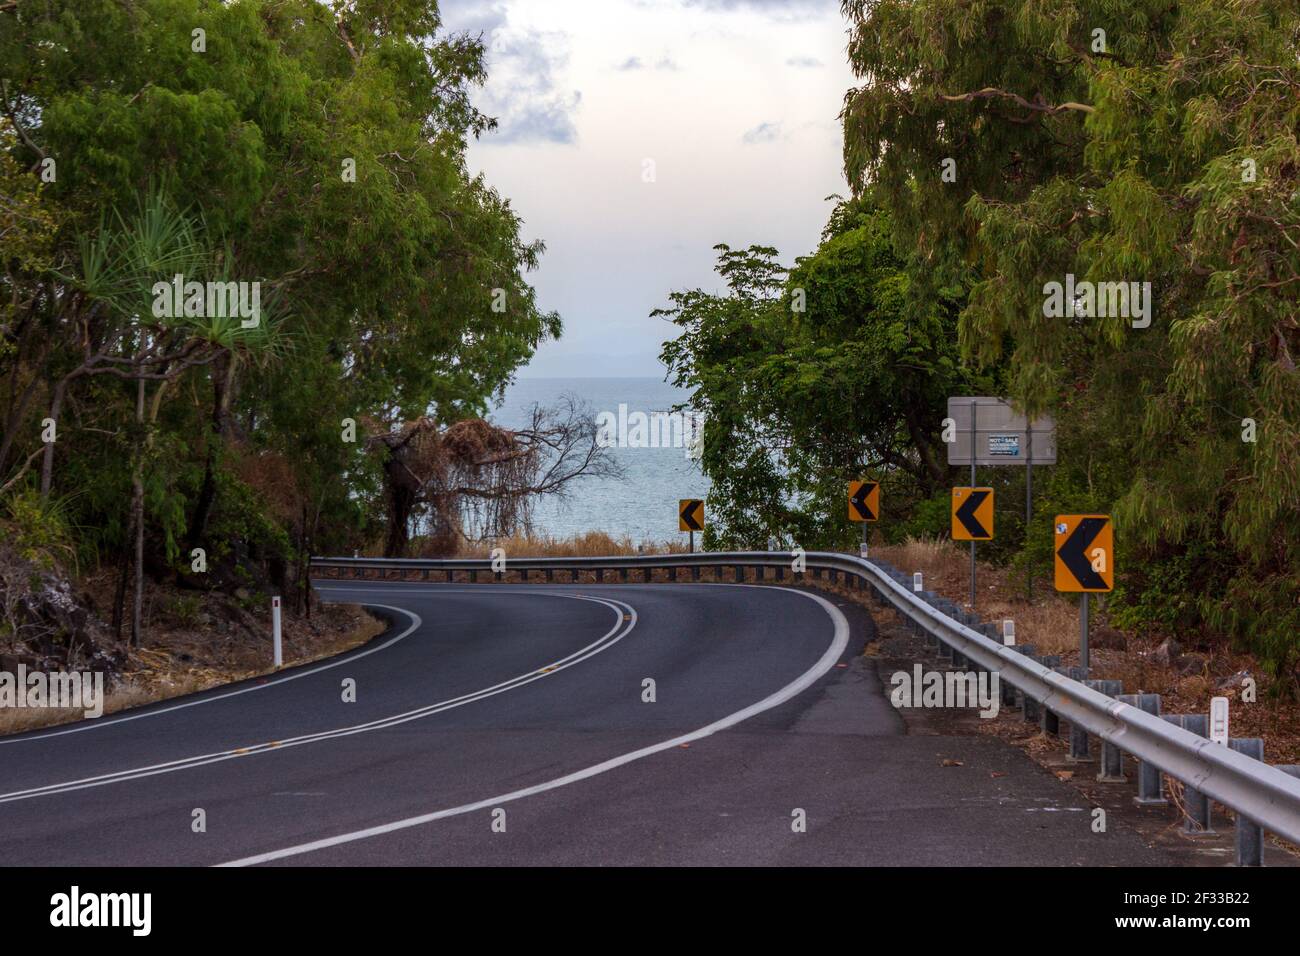 Al norte del mirador Rex, una barandilla define una curva en la autopista Capitan Cook entre Cairns y Port Douglas, Queensland, Australia. Foto de stock